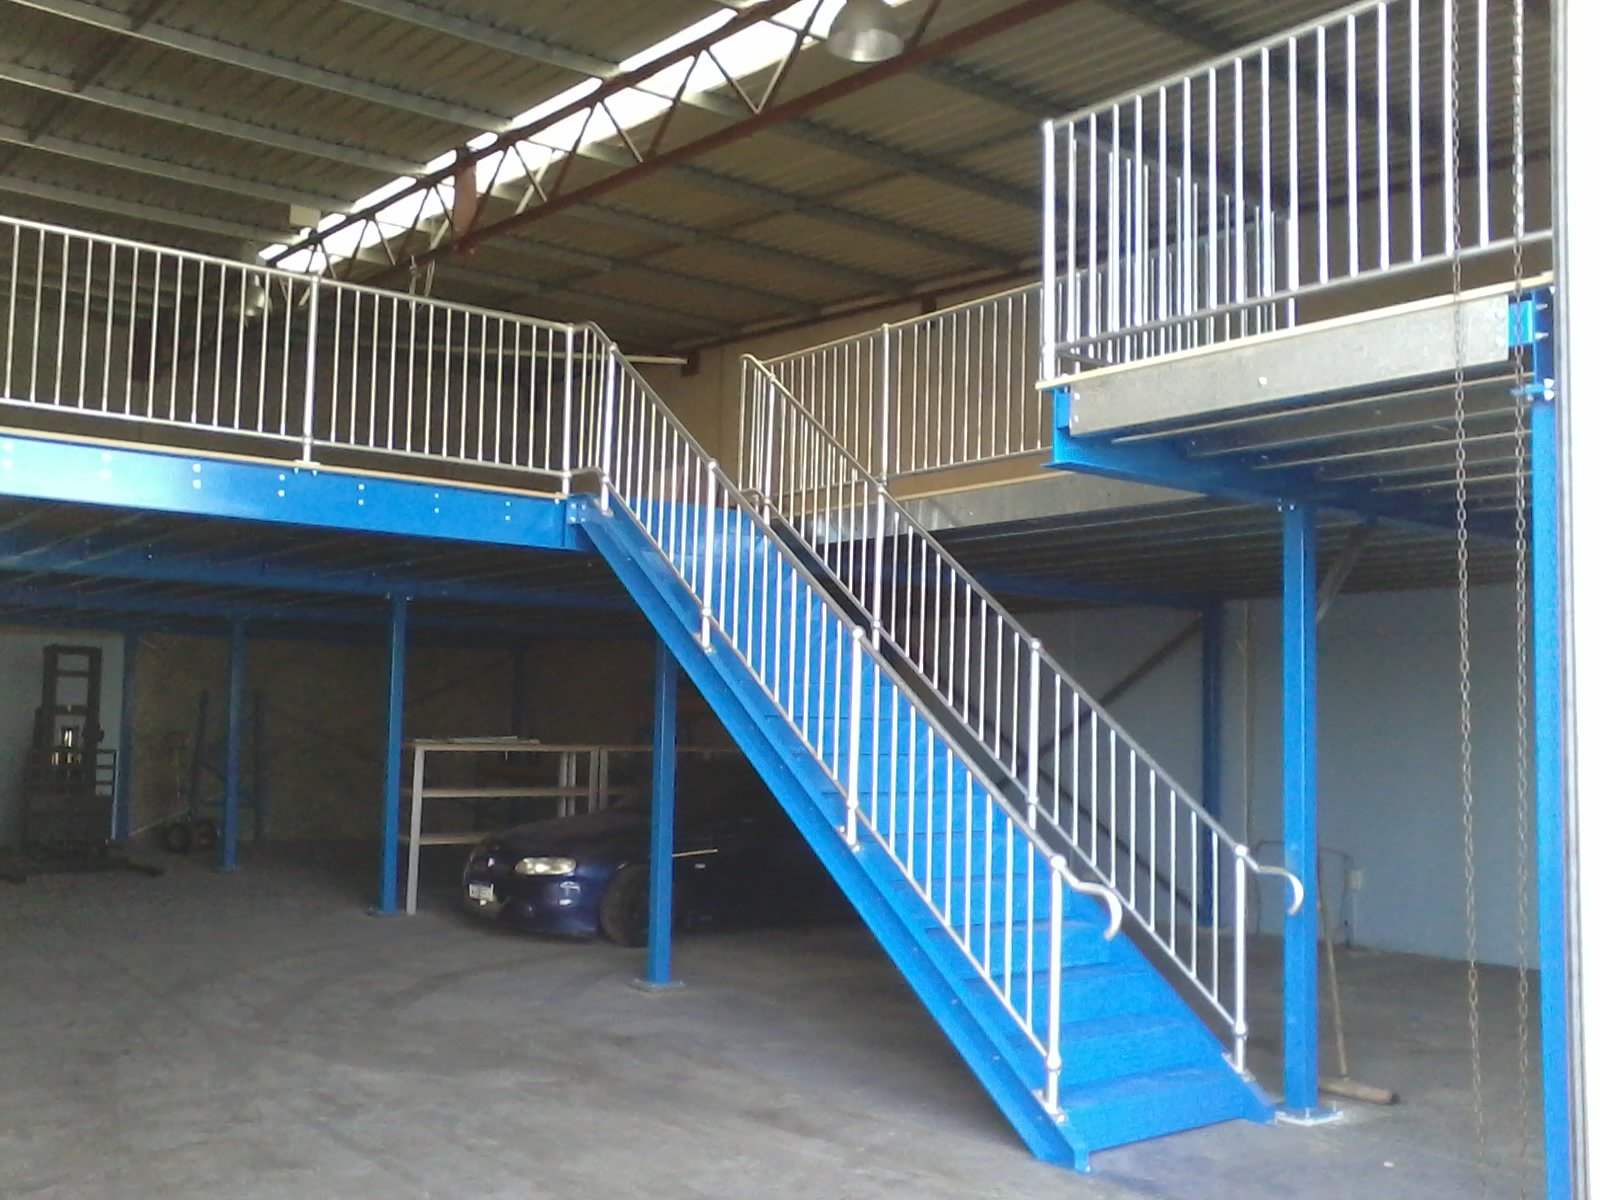 Large Mezzanine Floor with Shelving - DMD Storage Group